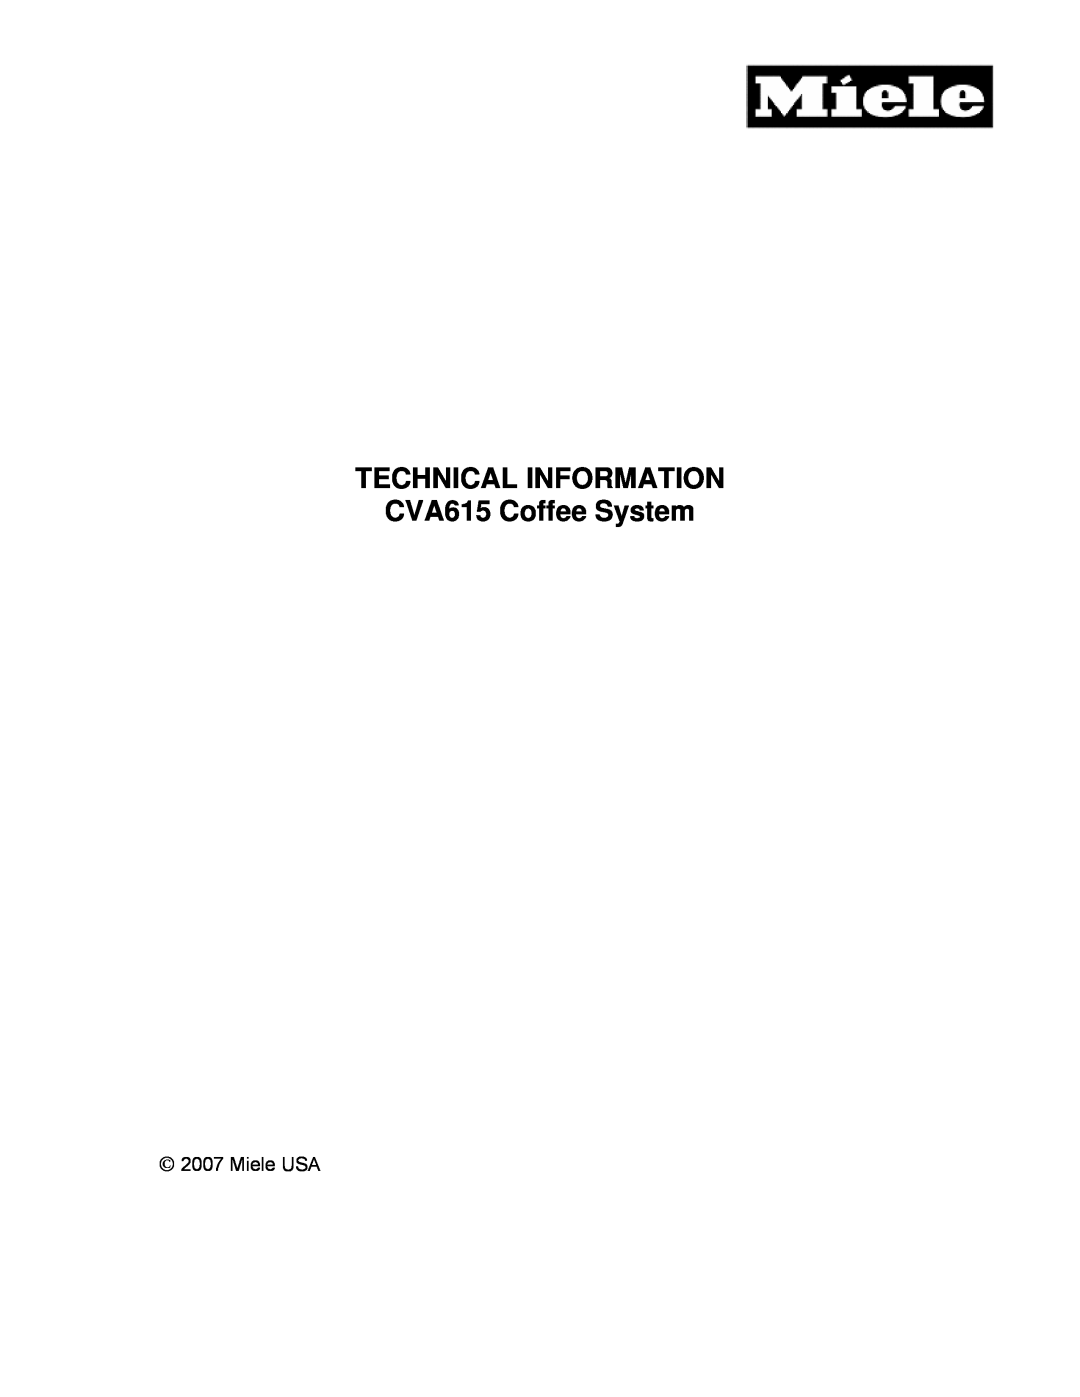 Miele manual TECHNICAL INFORMATION CVA615 Coffee System, Miele USA 